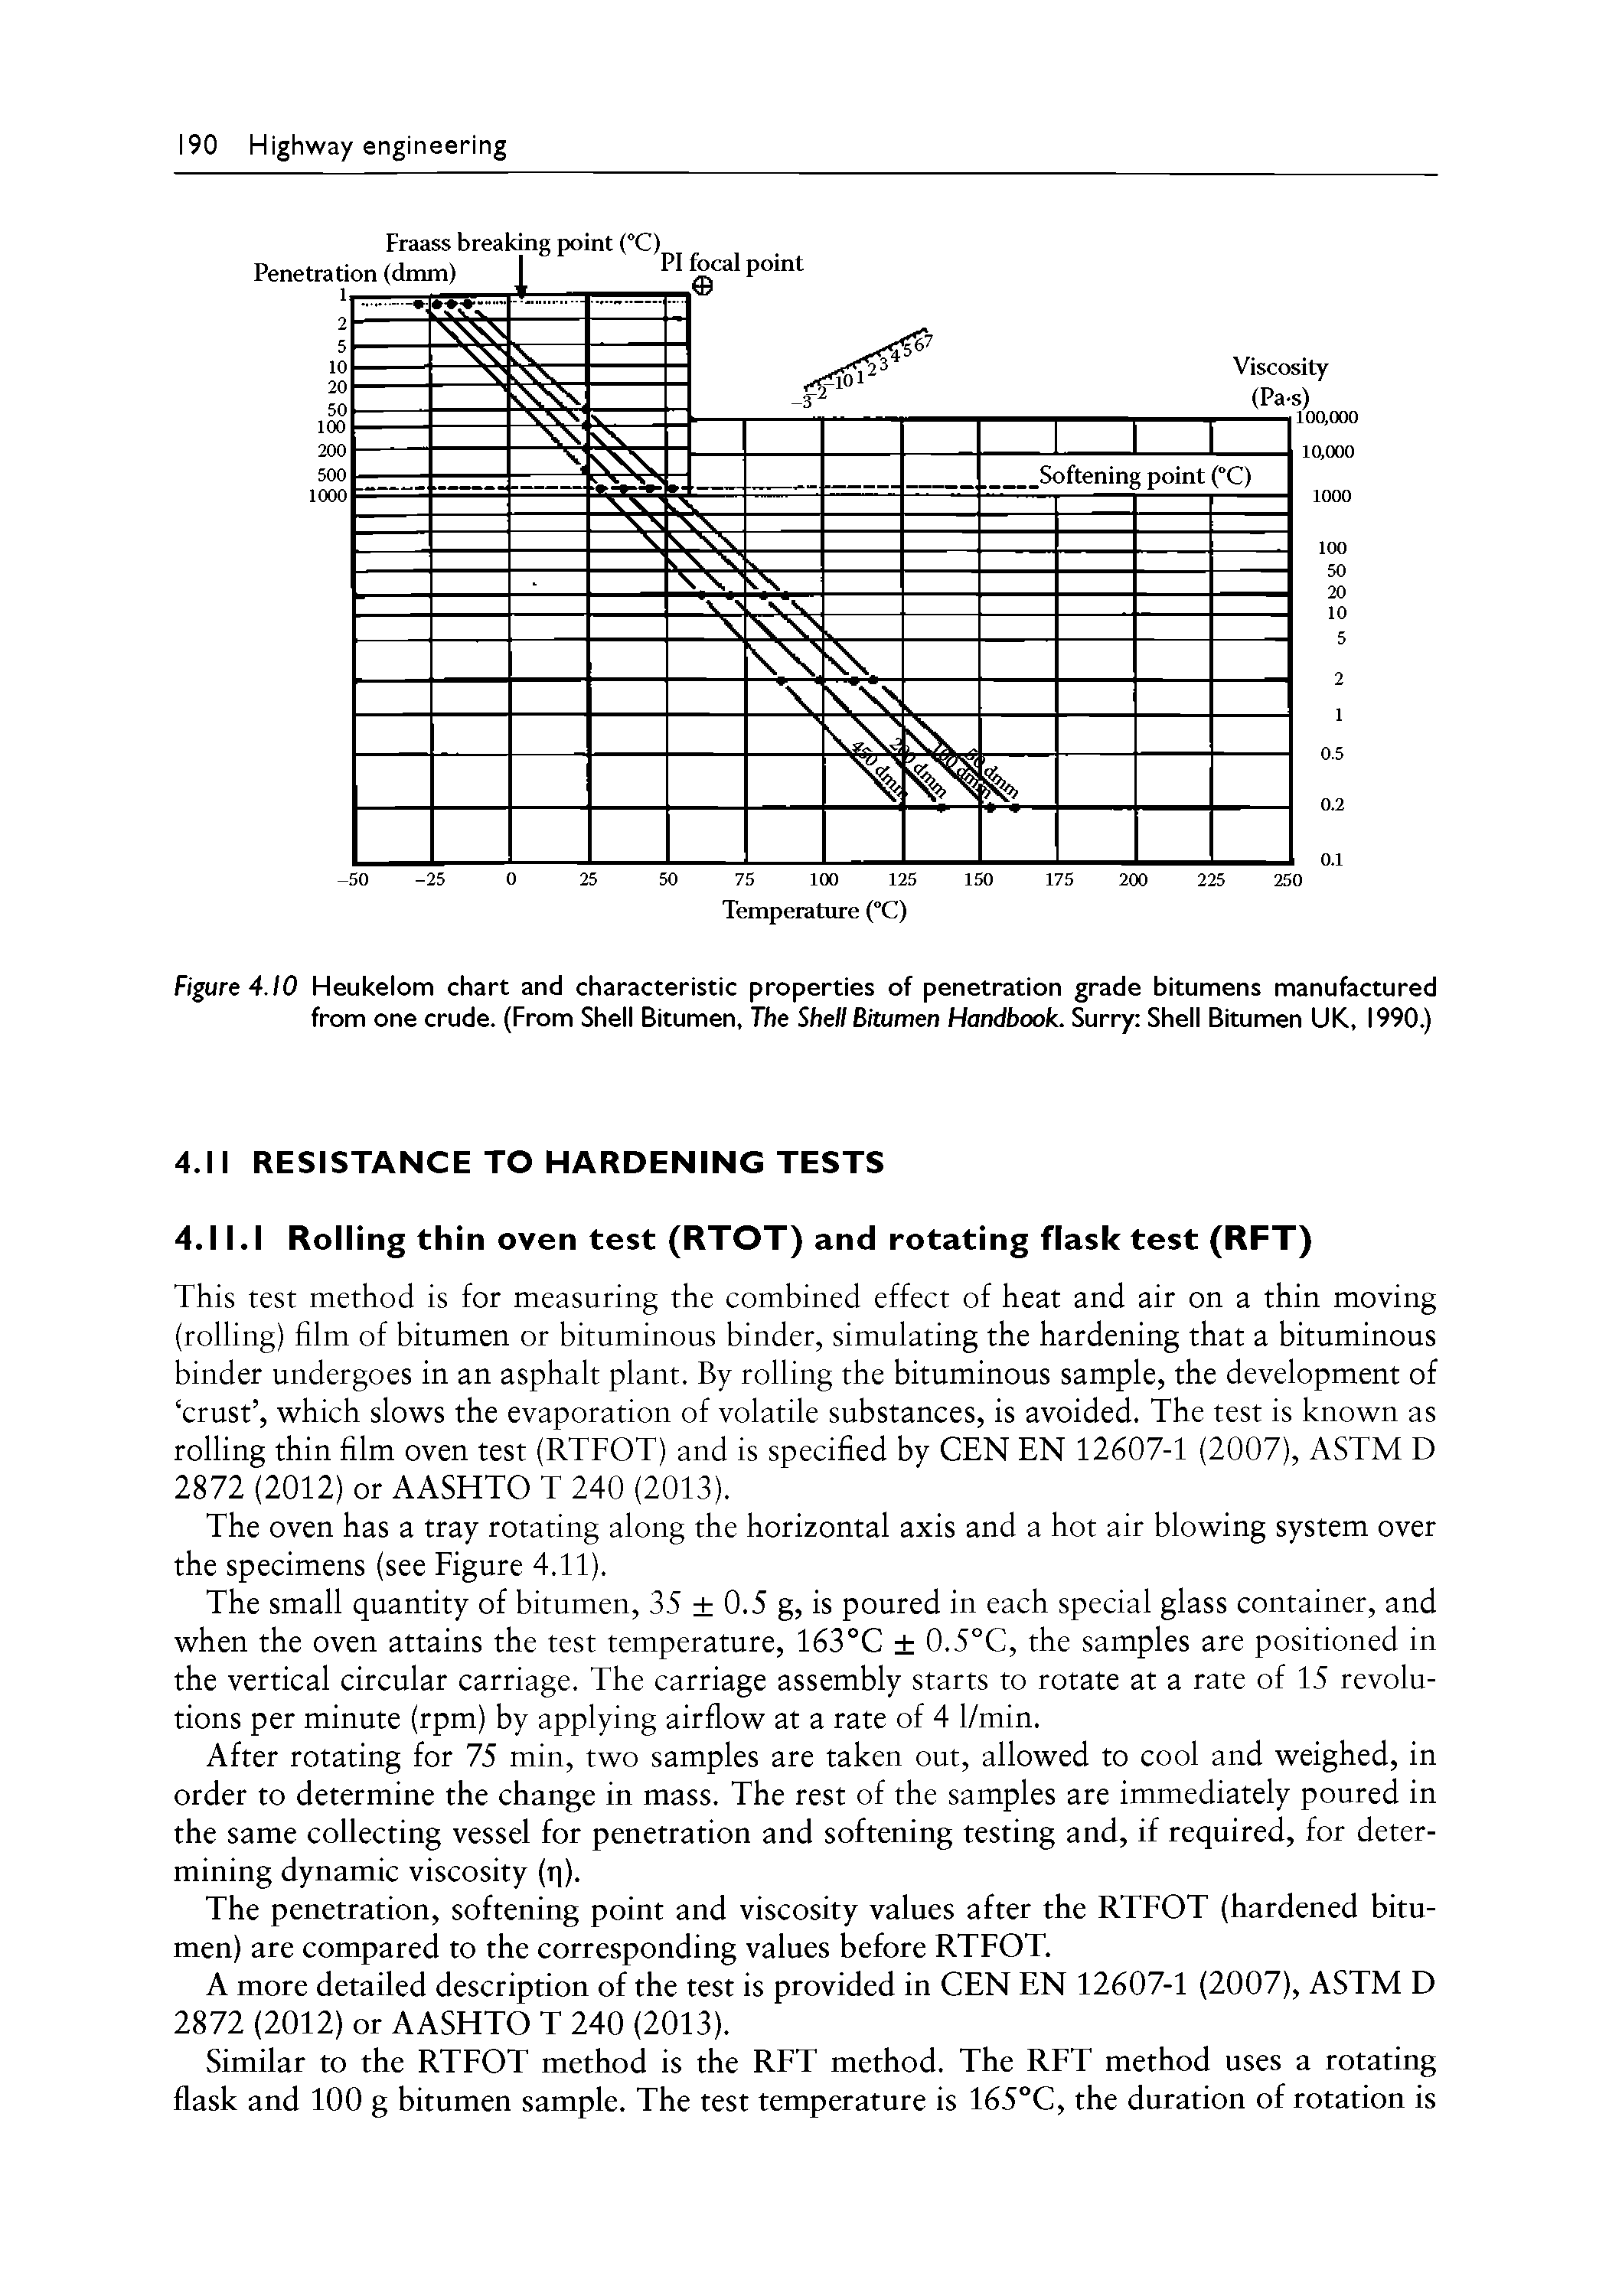 Figure 4.10 Heukelom chart and characteristic properties of penetration grade bitumens manufoctured from one crude. (From Shell Bitumen, The Shell Bitumen Handbook. Surry Shell Bitumen UK, 1990.)...